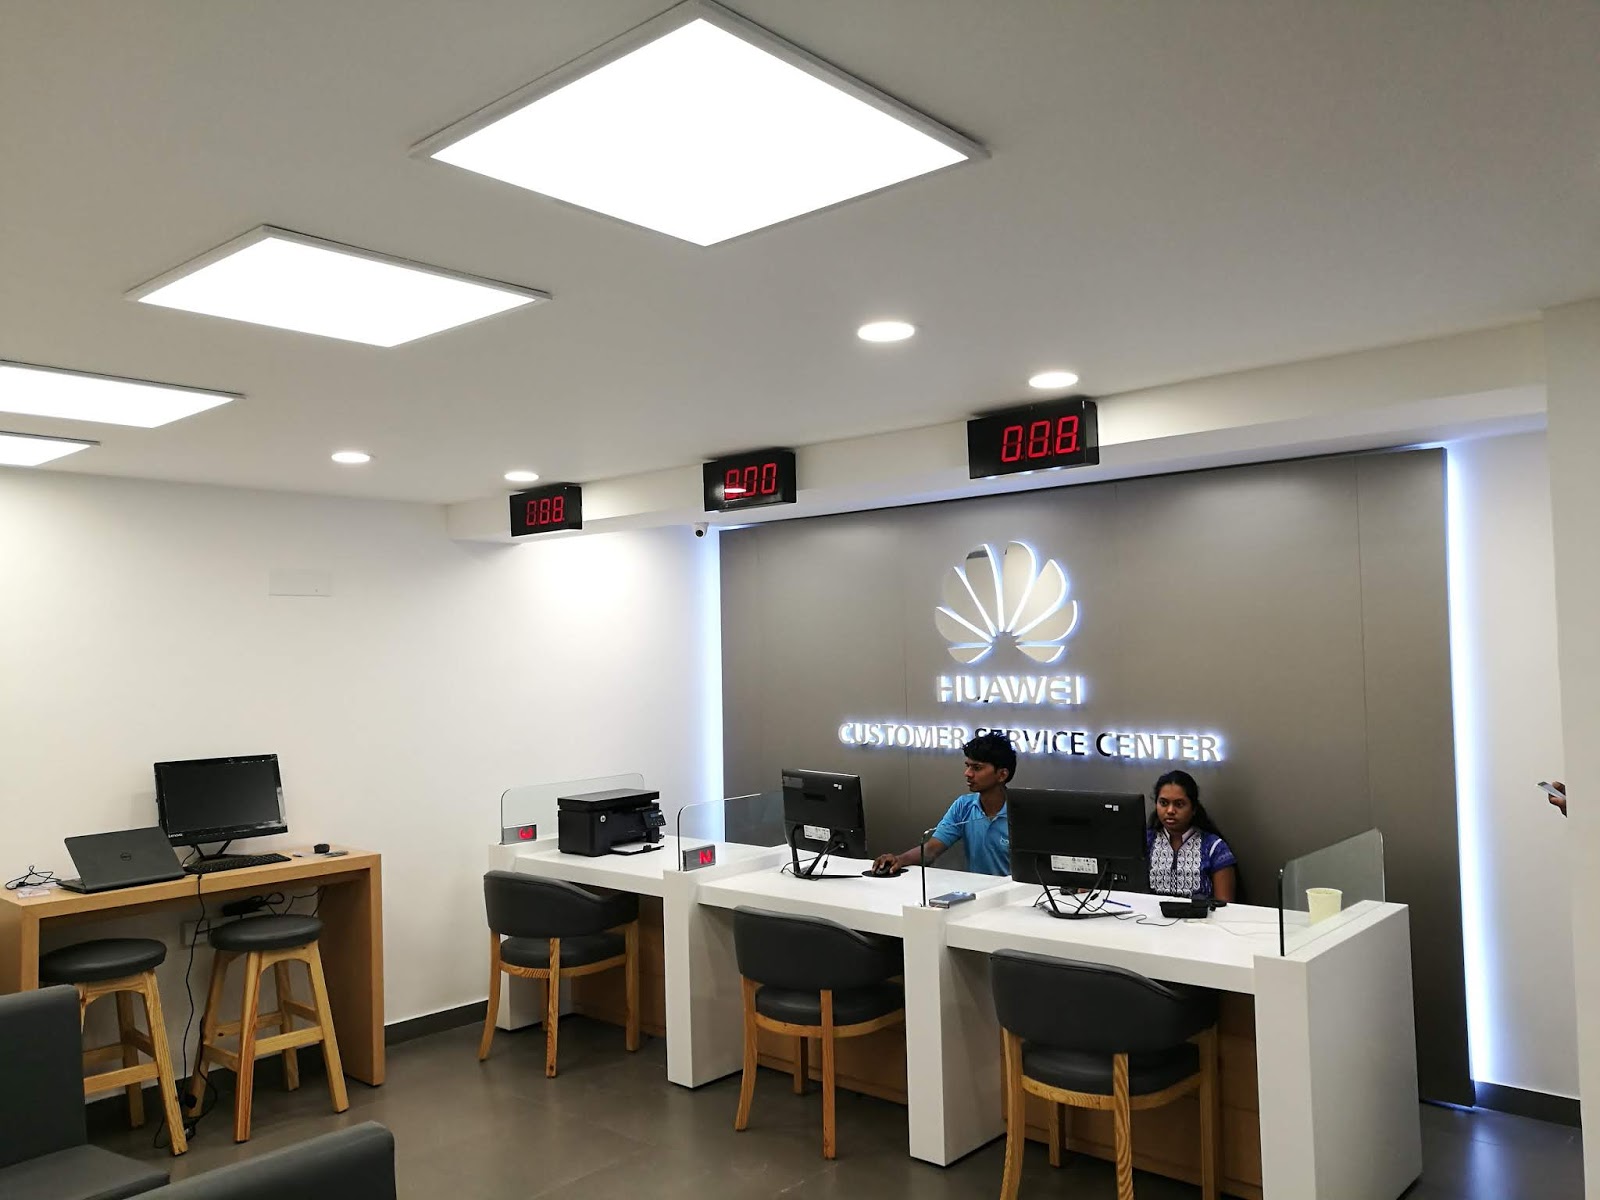 Huawei Customer Service Center